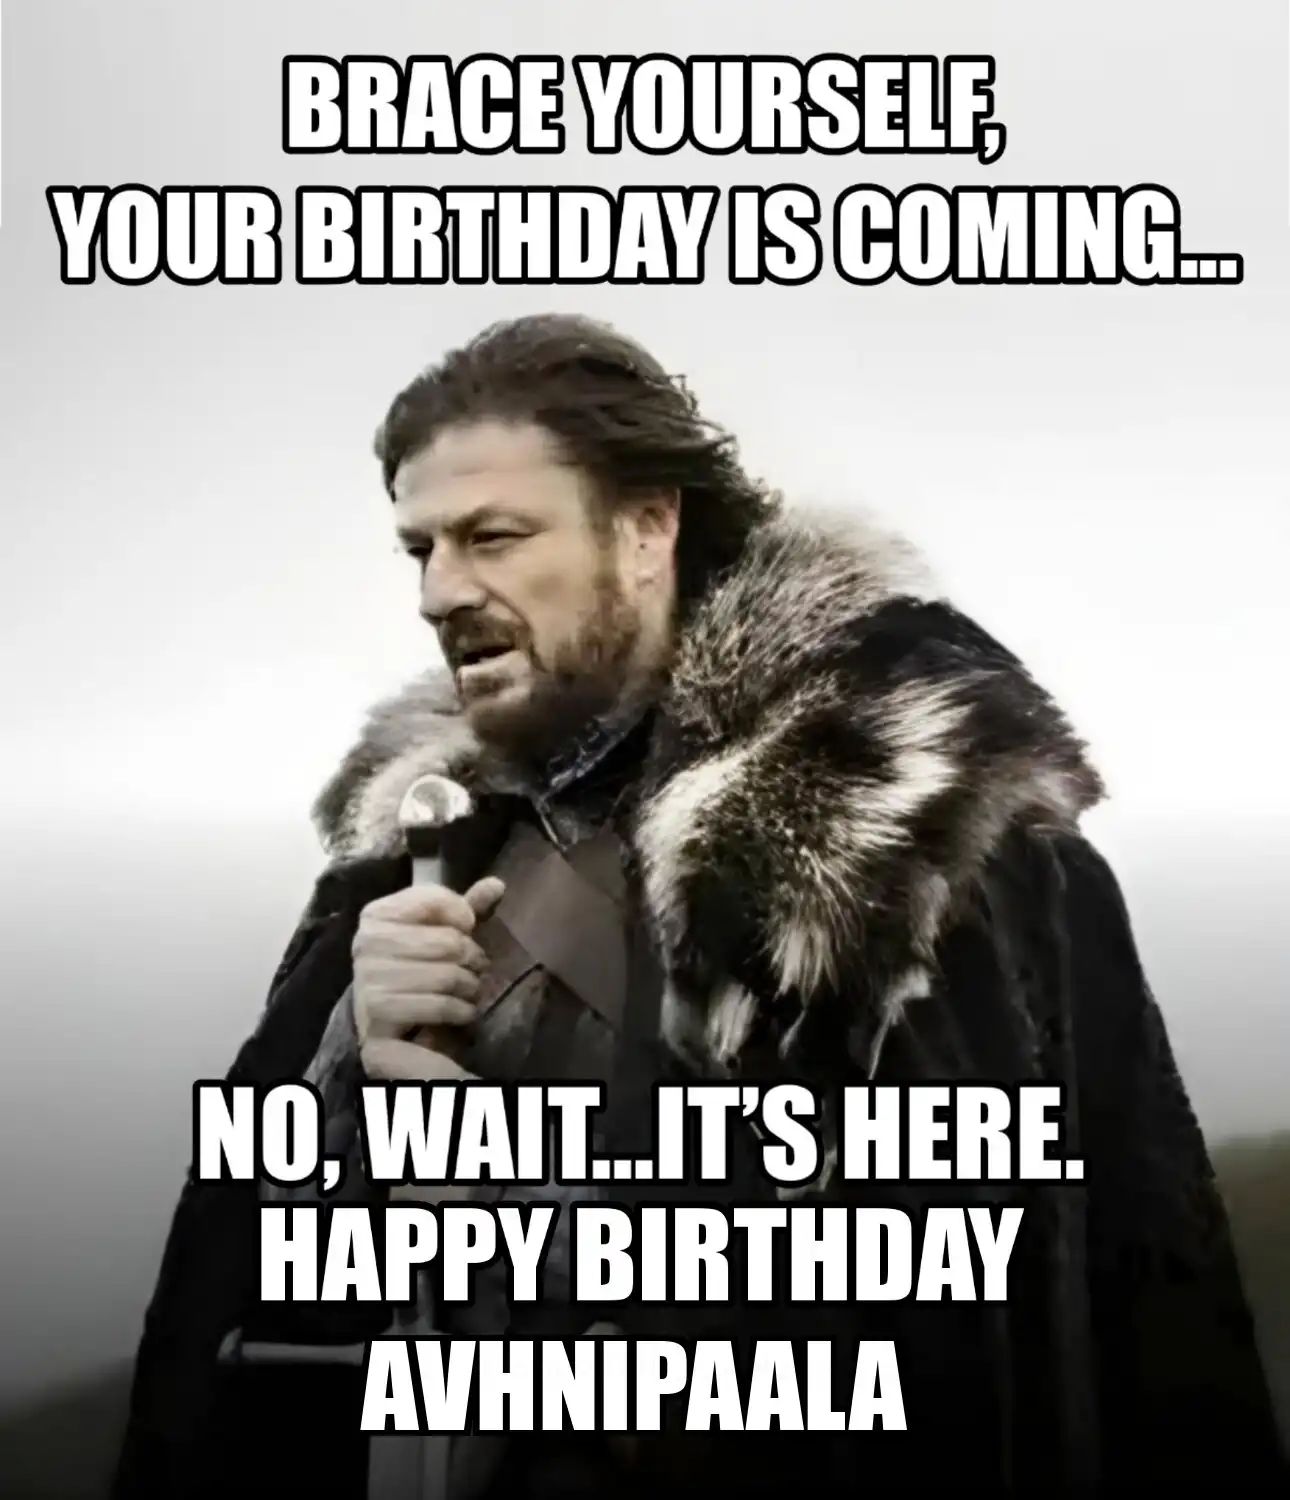 Happy Birthday Avhnipaala Brace Yourself Your Birthday Is Coming Meme